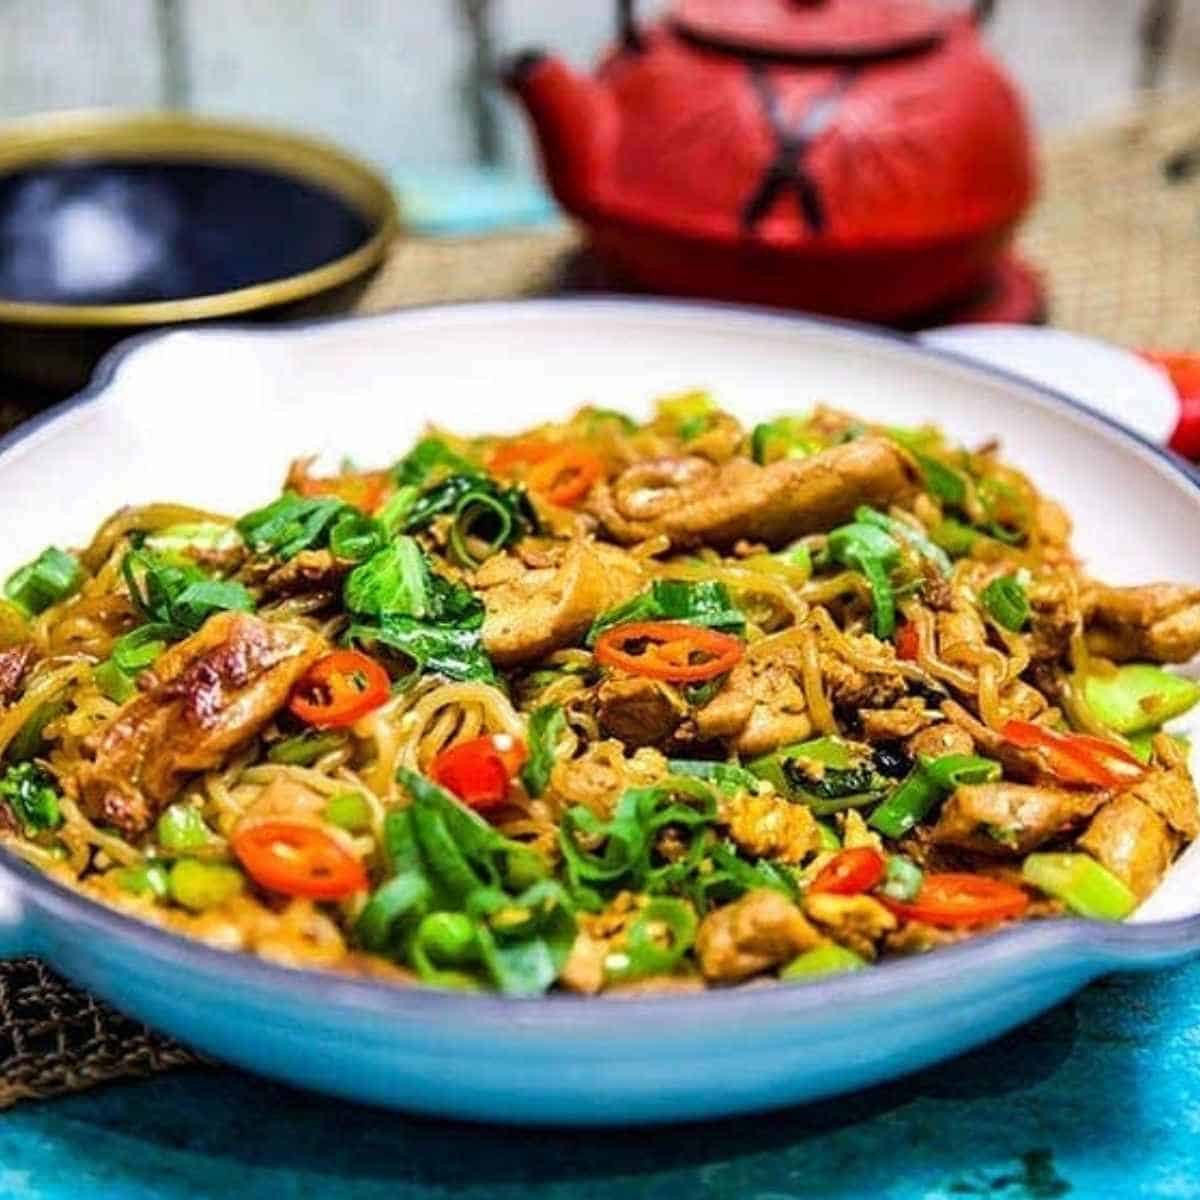 Chicken pad see ew - Shirataki: The True Keto Approved Asian Noodle